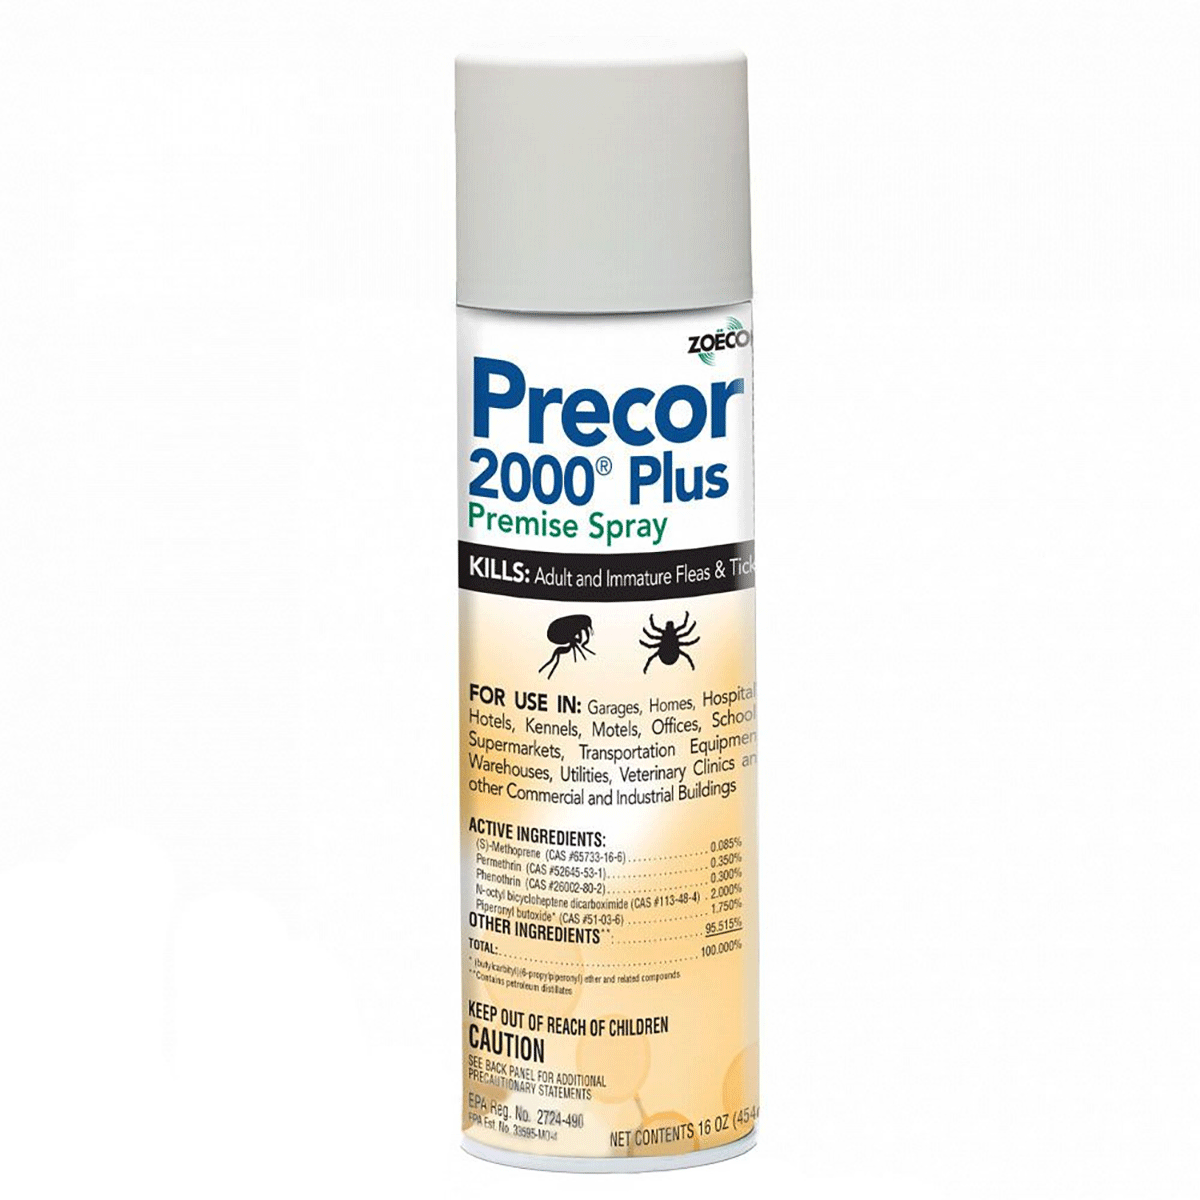 Precor 2000 Plus Premise Spray 